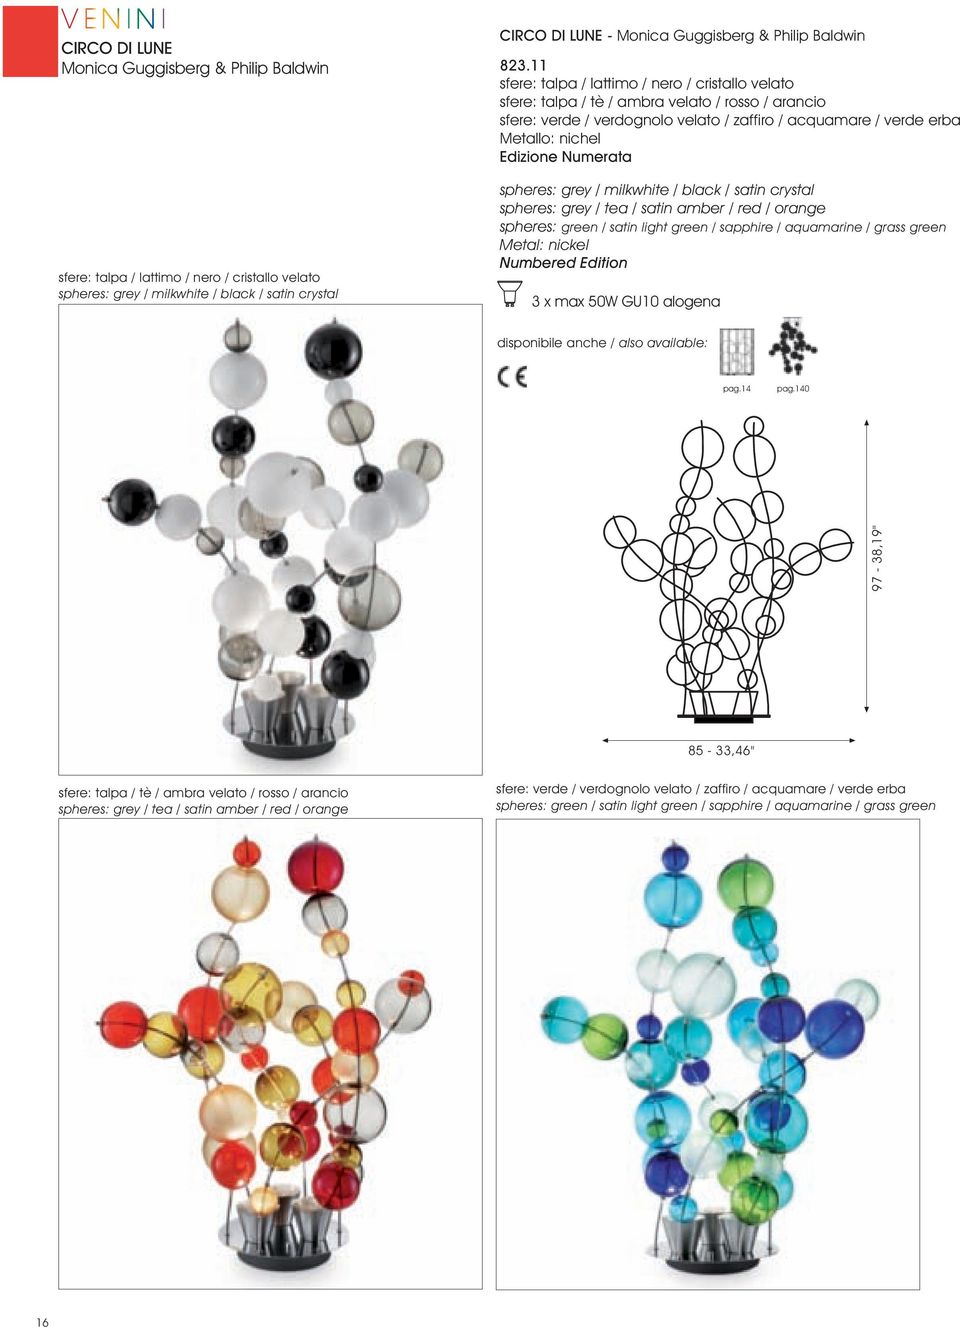 Numerata spheres: grey / milkwhite / black / satin crystal spheres: grey / tea / satin amber / red / orange spheres: green / satin light green / sapphire / aquamarine / grass green Metal: nickel